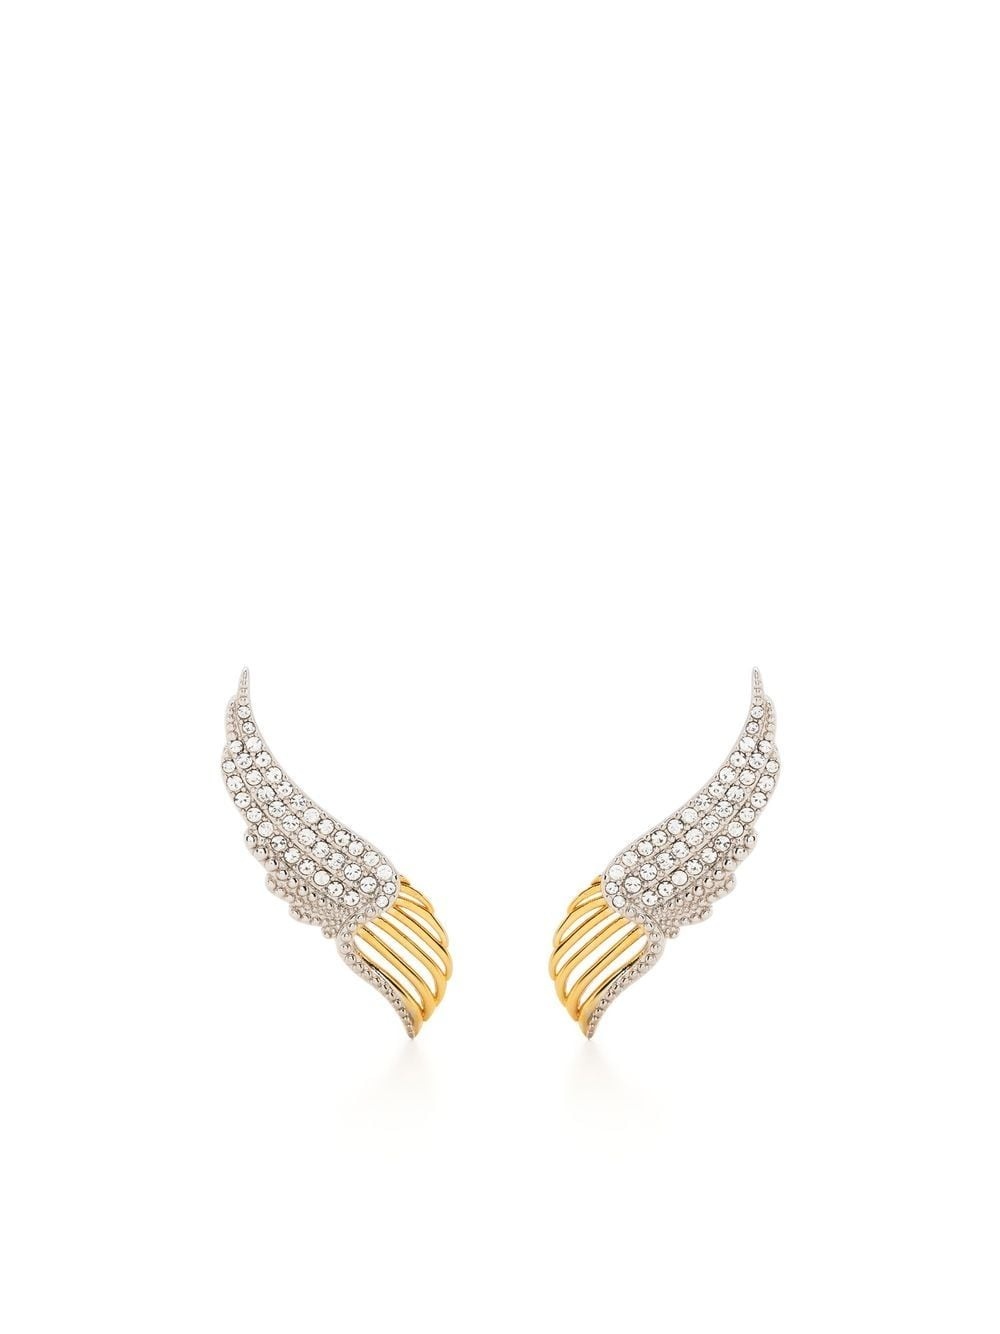 embellished wing earrings - 1